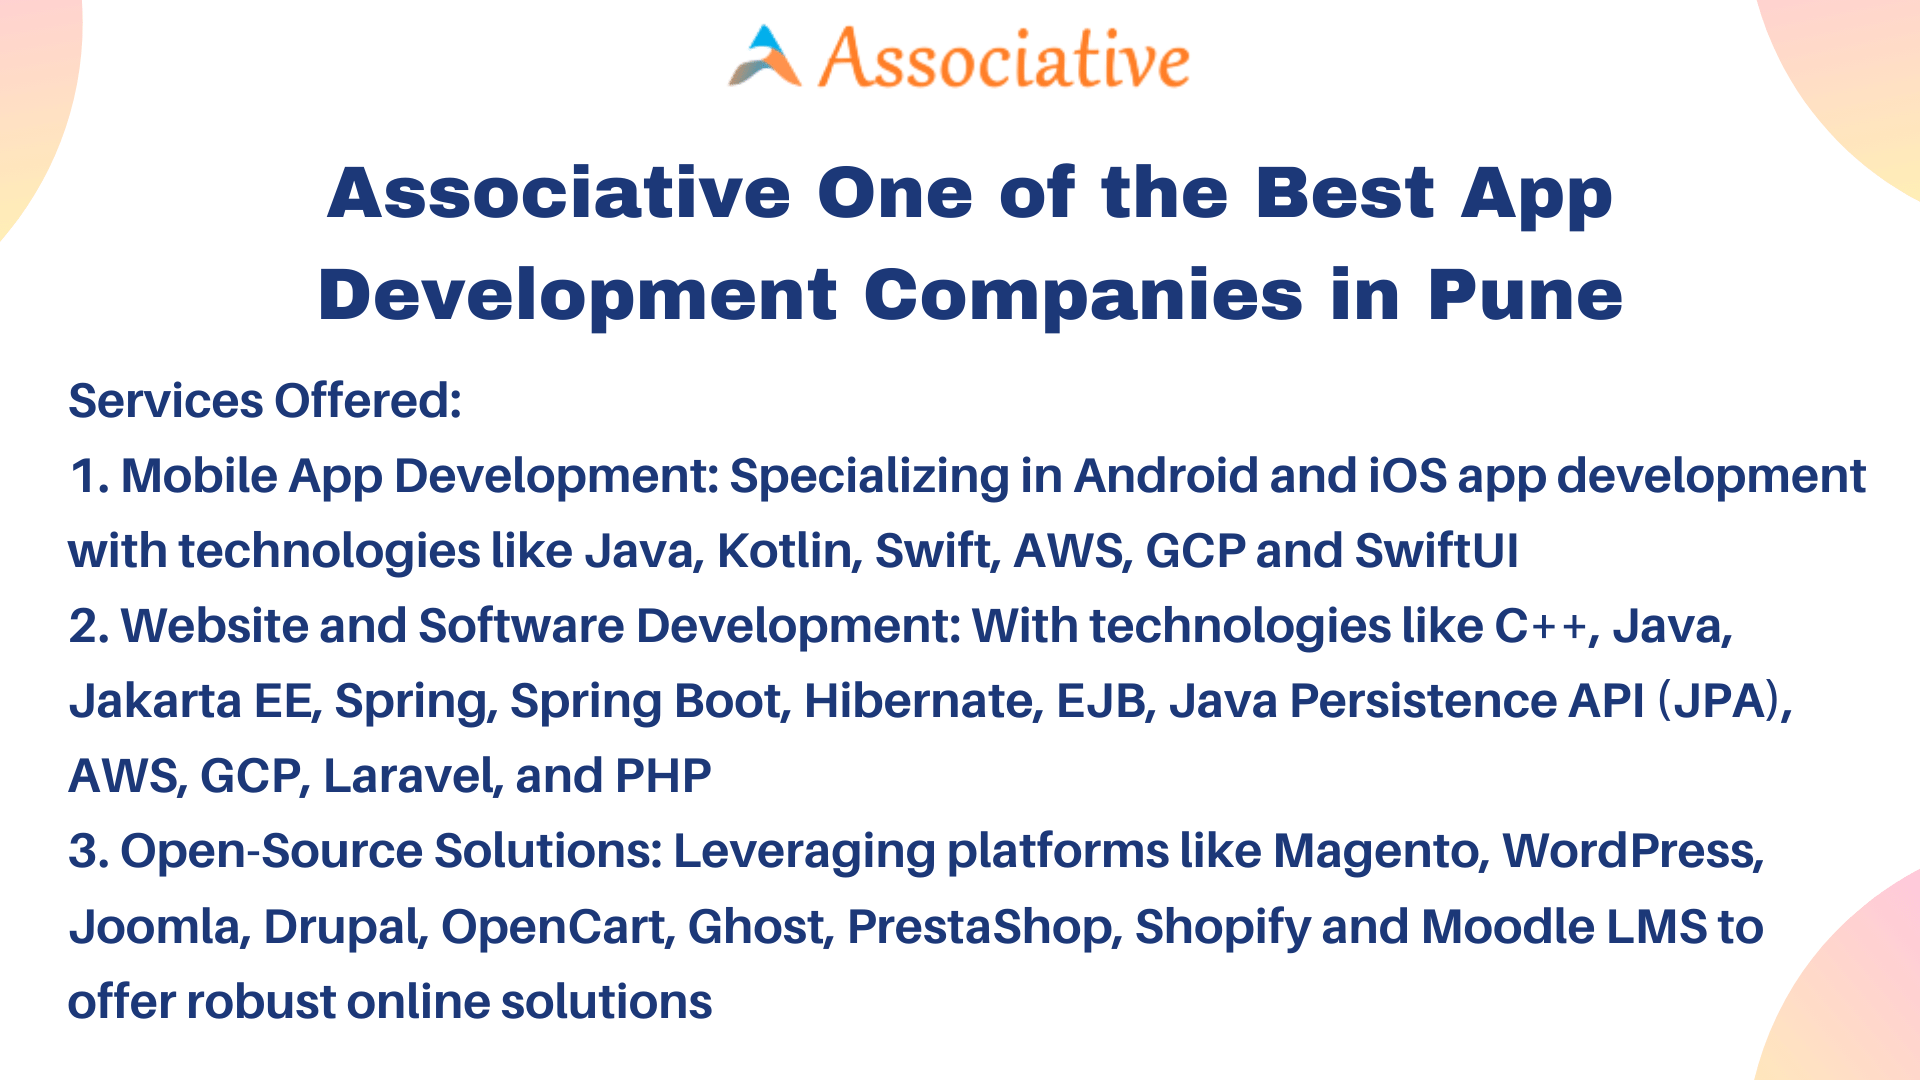 Associative One of the Best App Development Companies in Pune